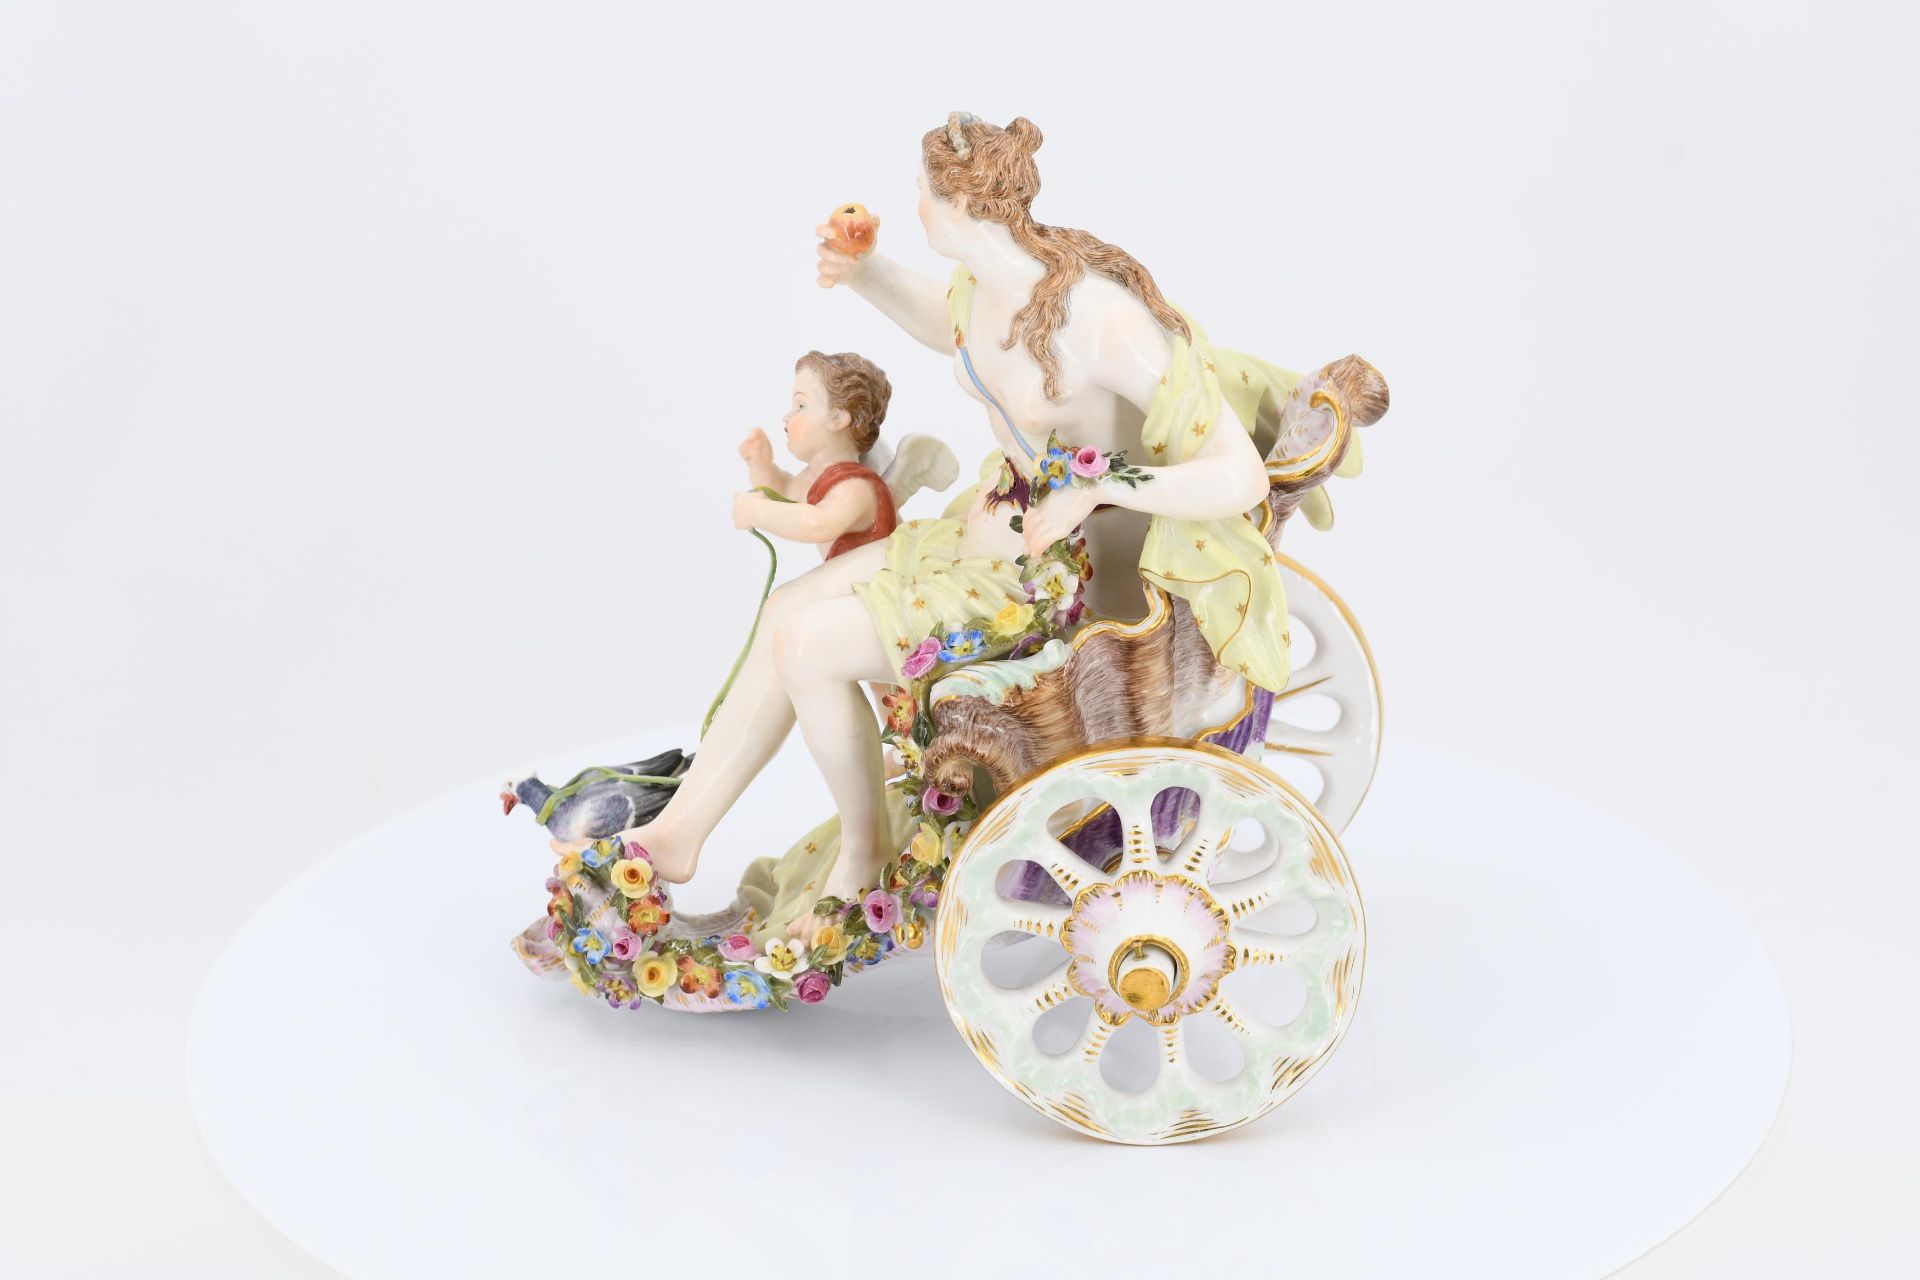 Porcelain figurine of Venus on carriage - Image 3 of 6